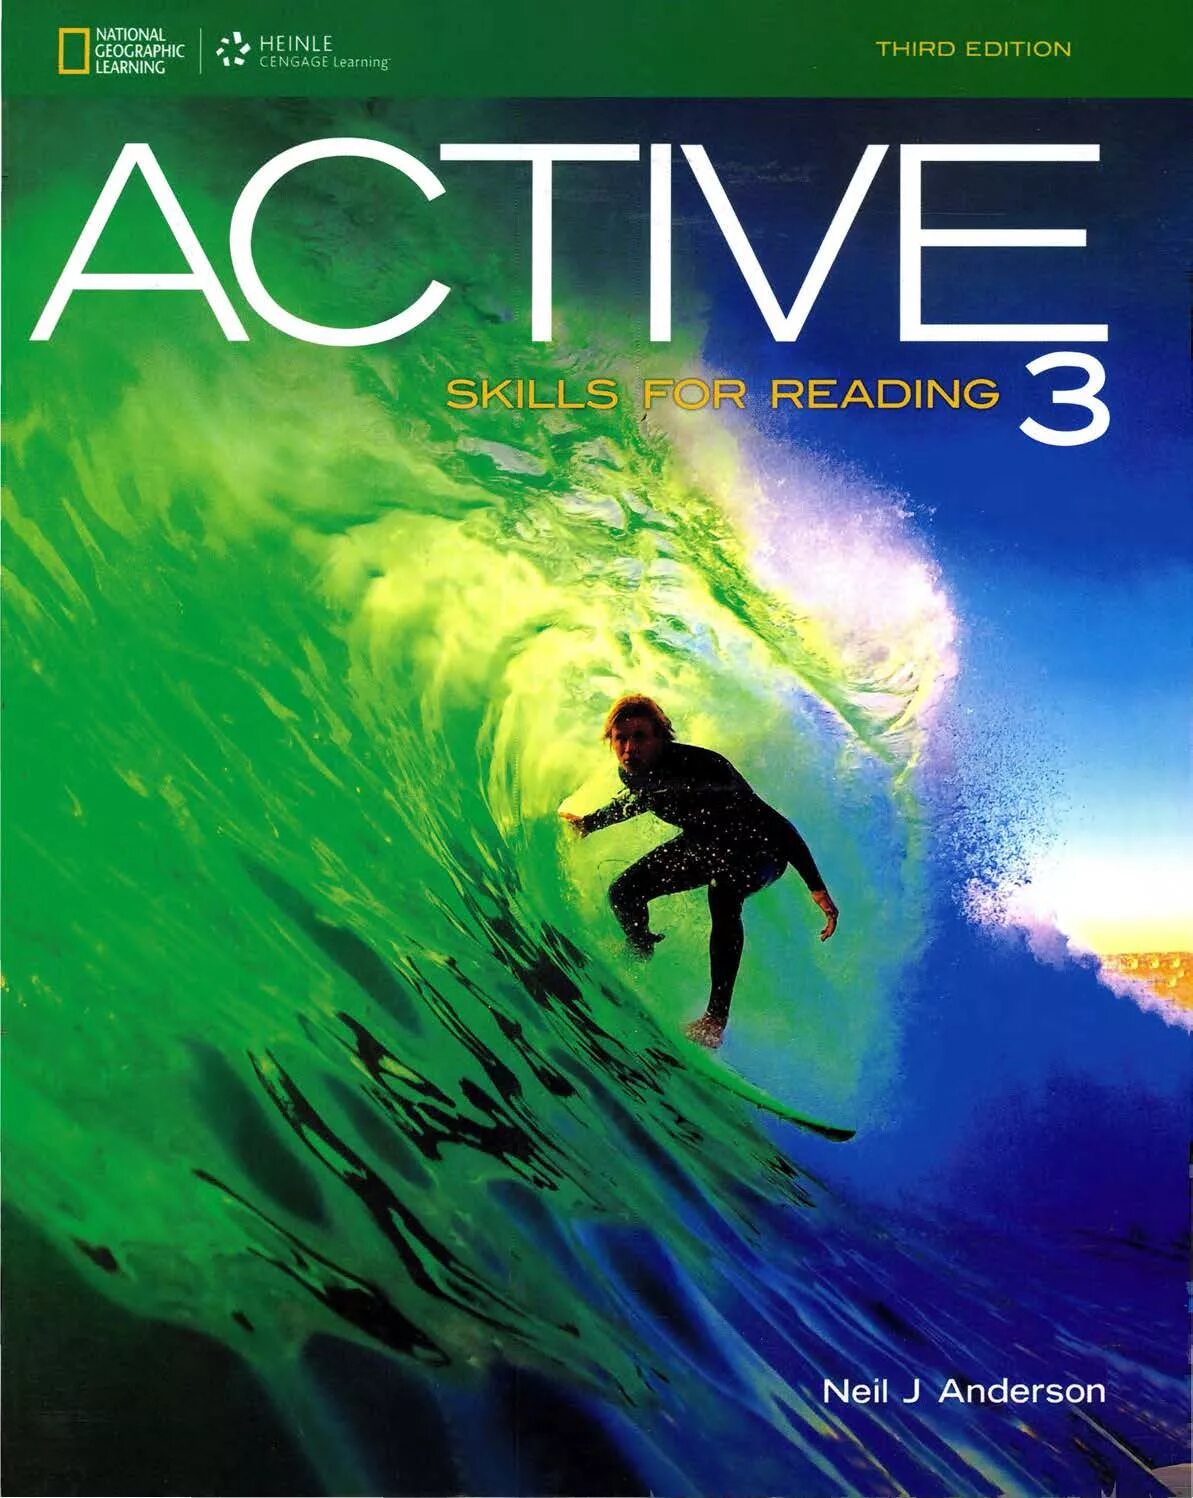 Active skills for reading 3. Active skills for reading 2. Active skills for reading 1. Active skills for reading 4.